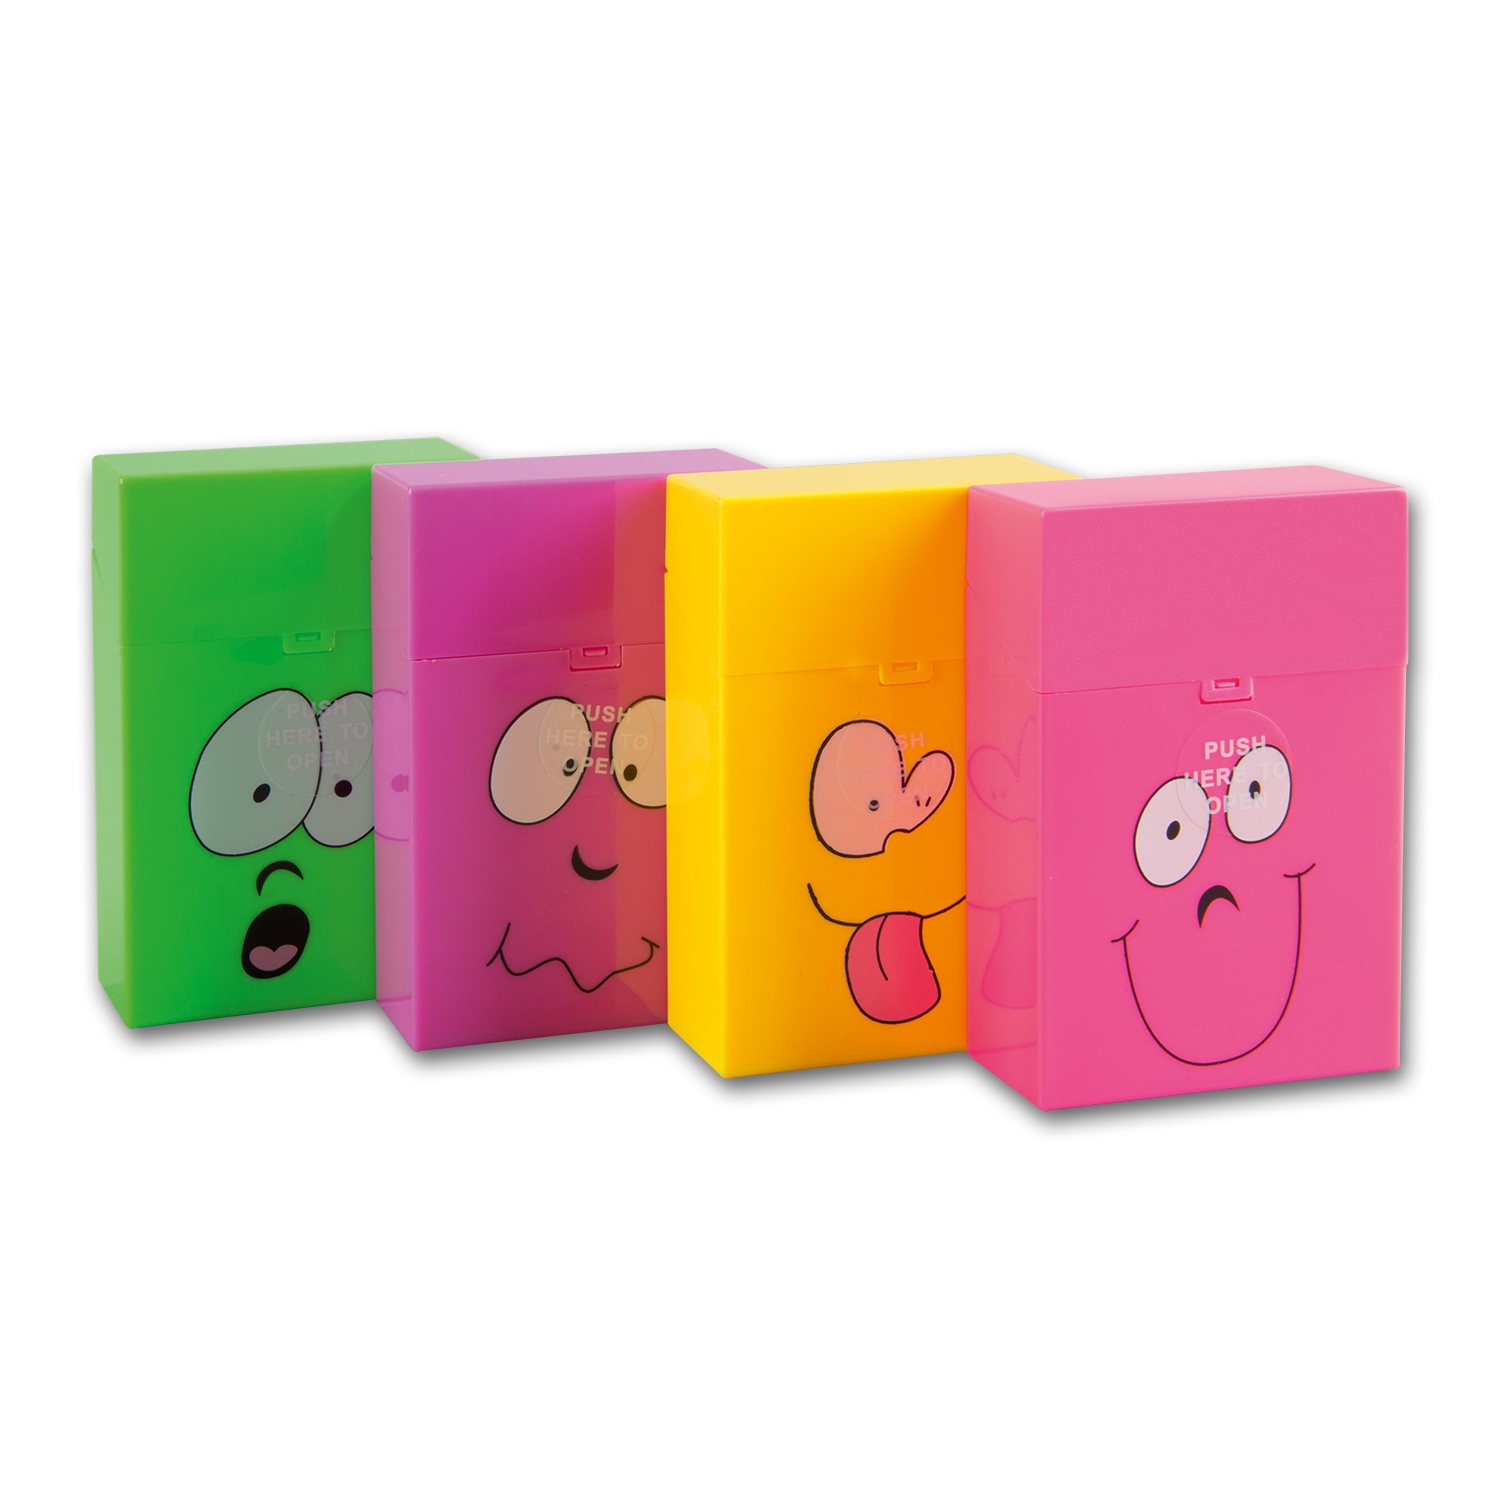 Zigarettenbox Kunststoff (12) Clic Box Smiley farblich sortiert